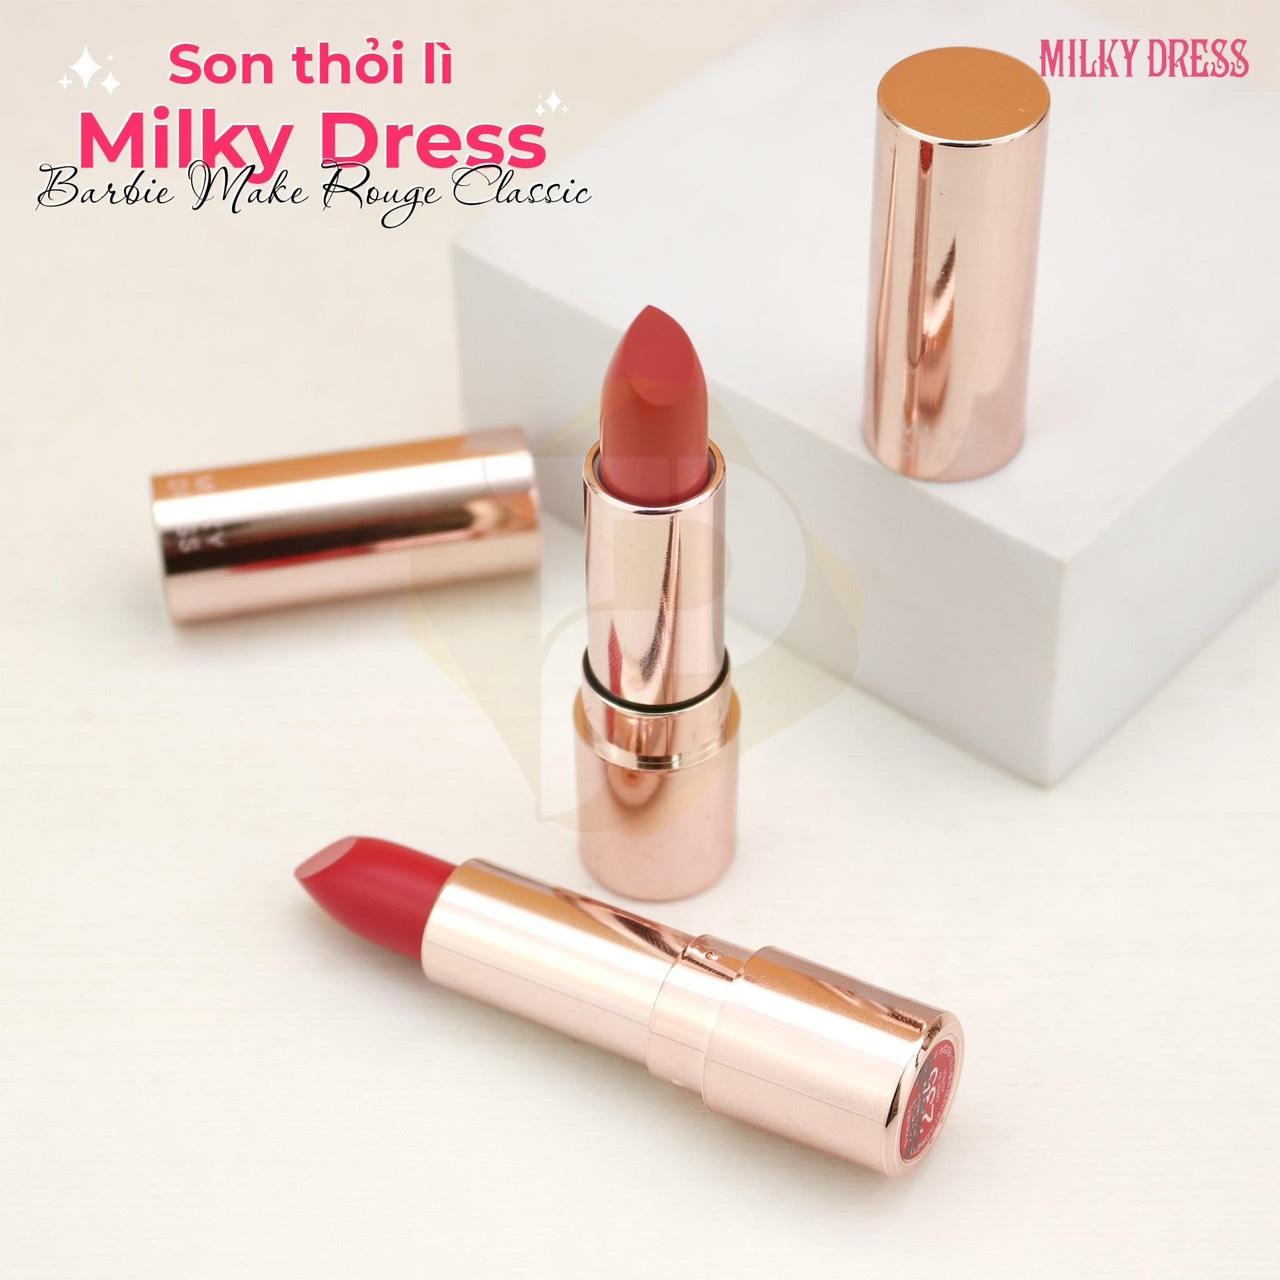 Milky Dress - Son lì Barbie Make Rouge Classic M418